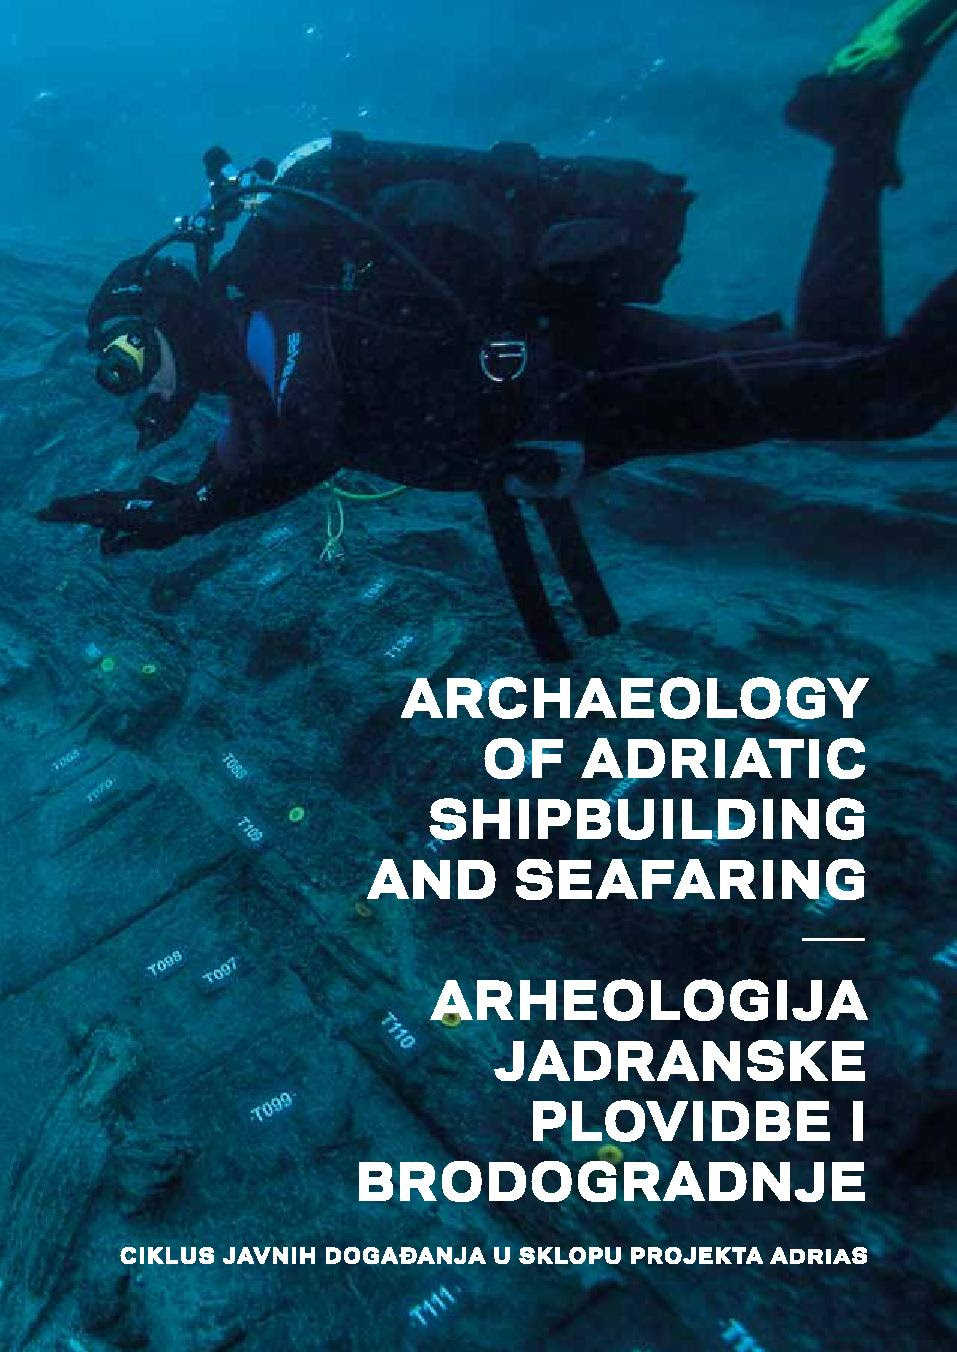 Arheologija jadranske plovidbe i brodogradnje